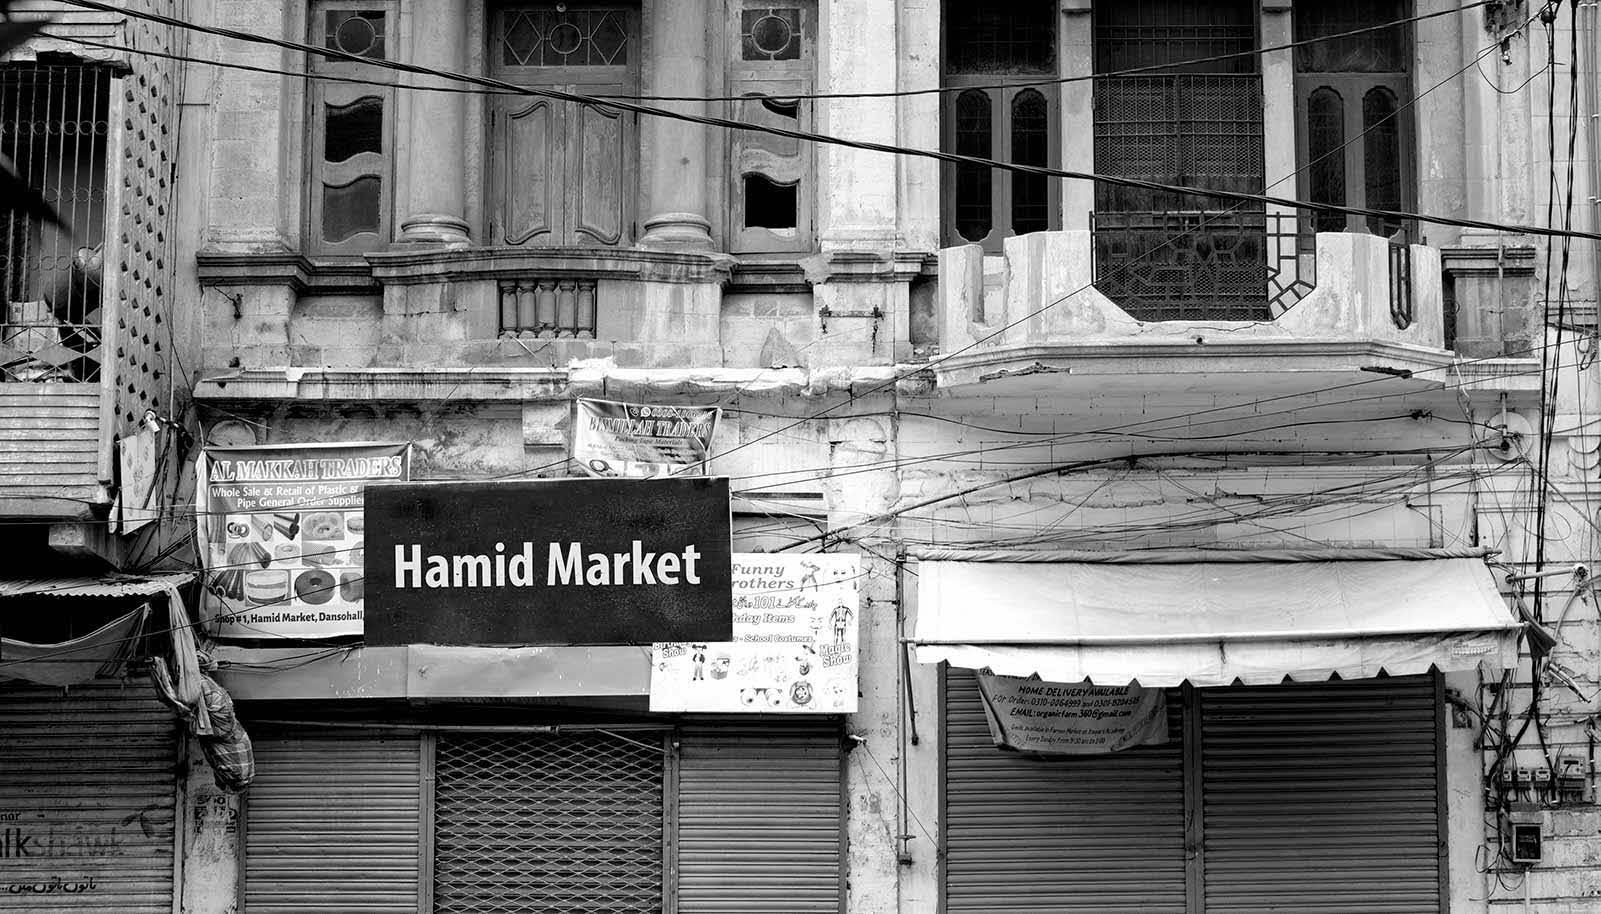 An image of Hamid Market, where Alecia’s work was set up for the Karachi Biennale. Image Credit: Karachi Biennale